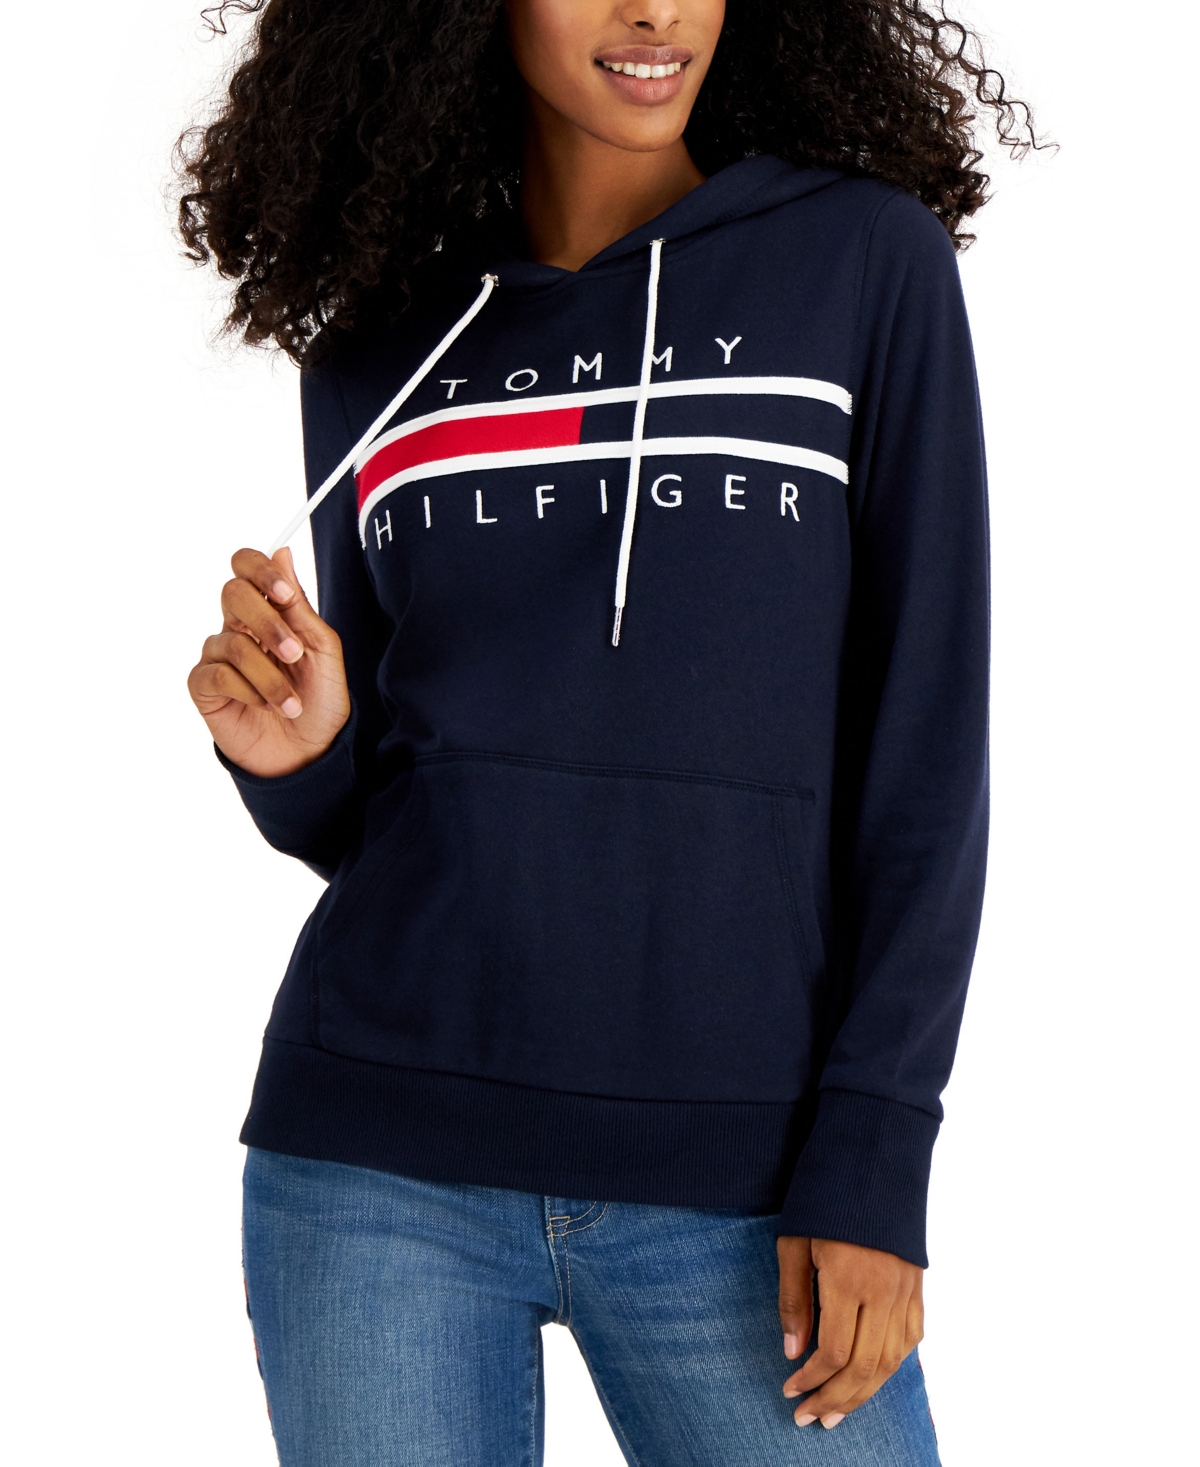  Tommy Hilfiger Women's Long Sleeve Front Pocket Logo Sweatshirt